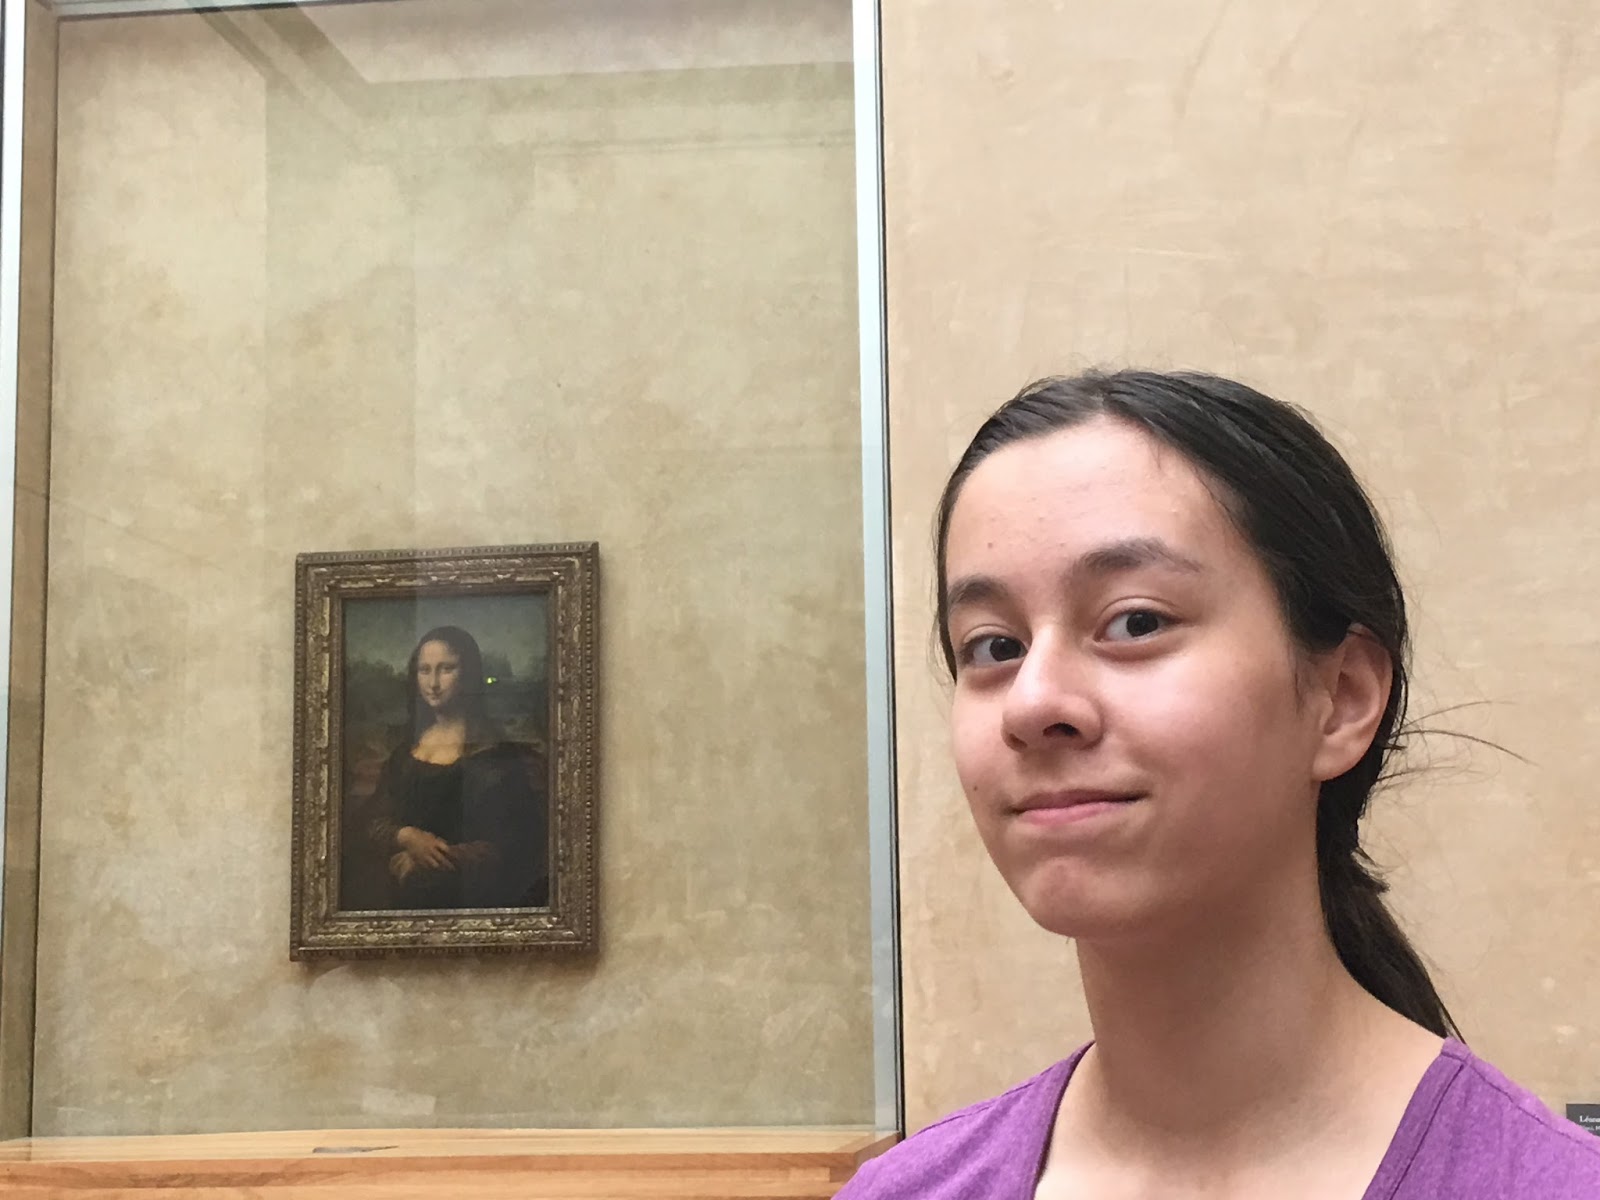 The well-protected Mona Lisa